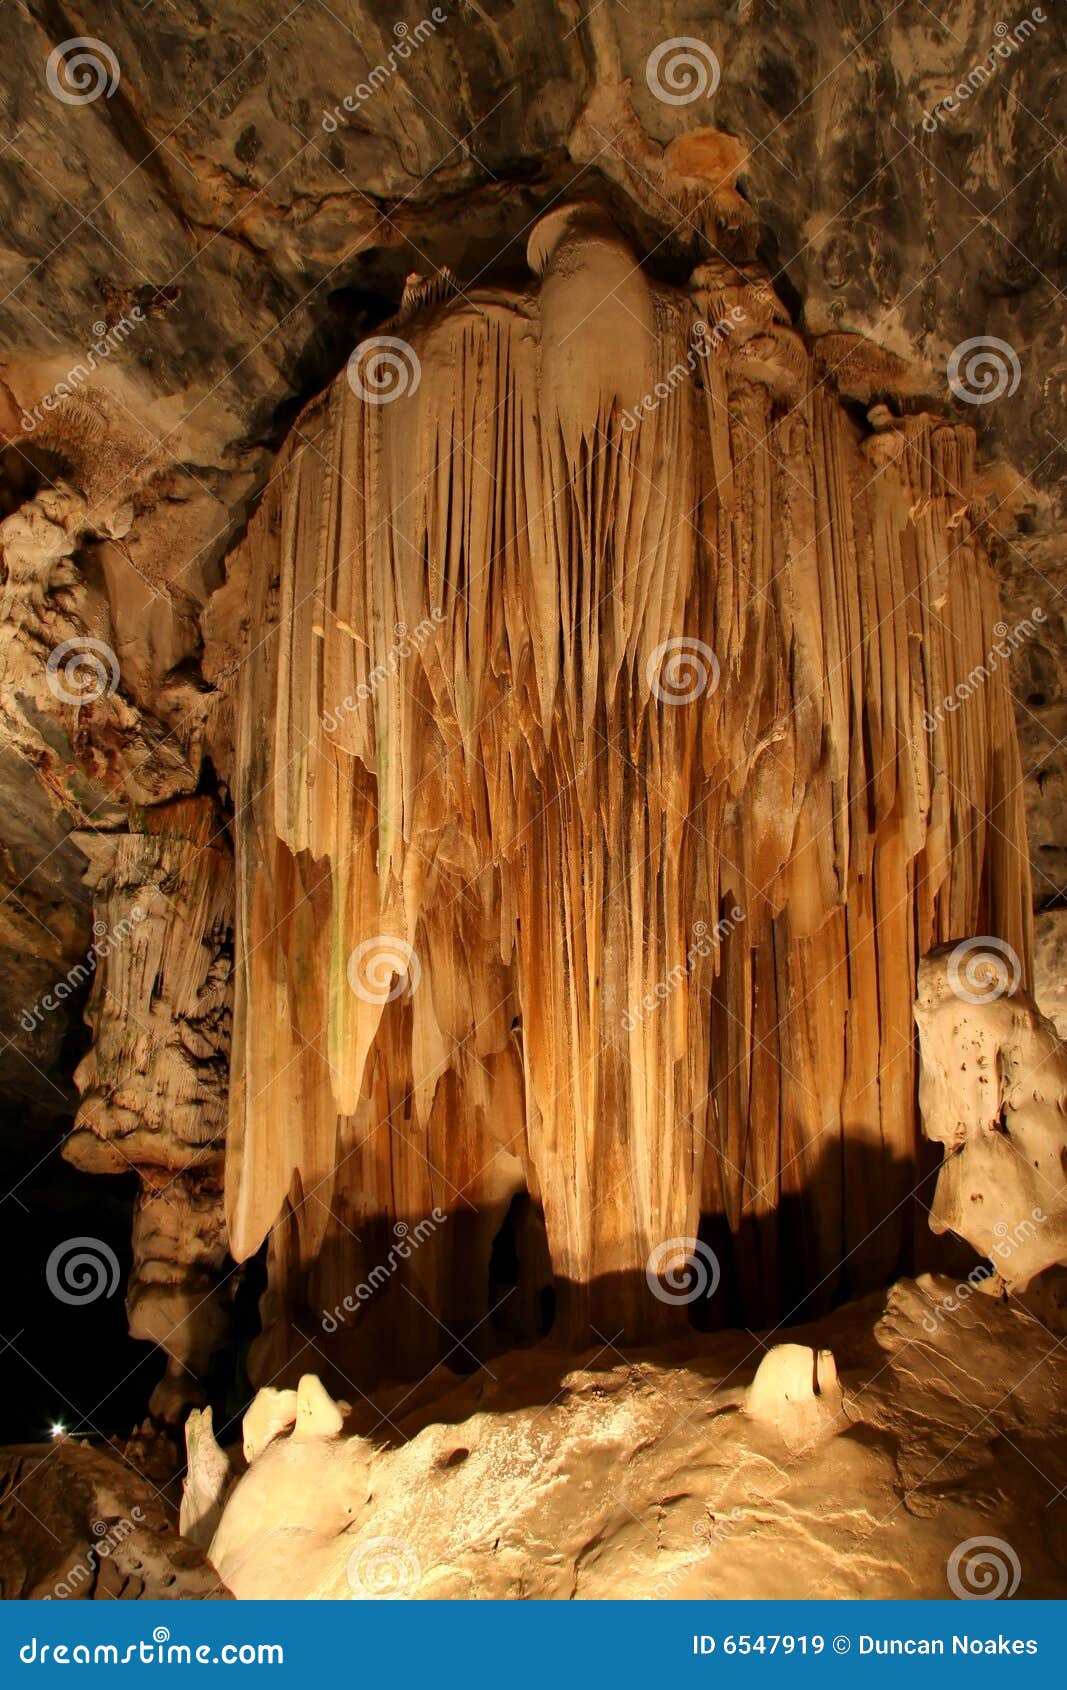 stalactites in cavern